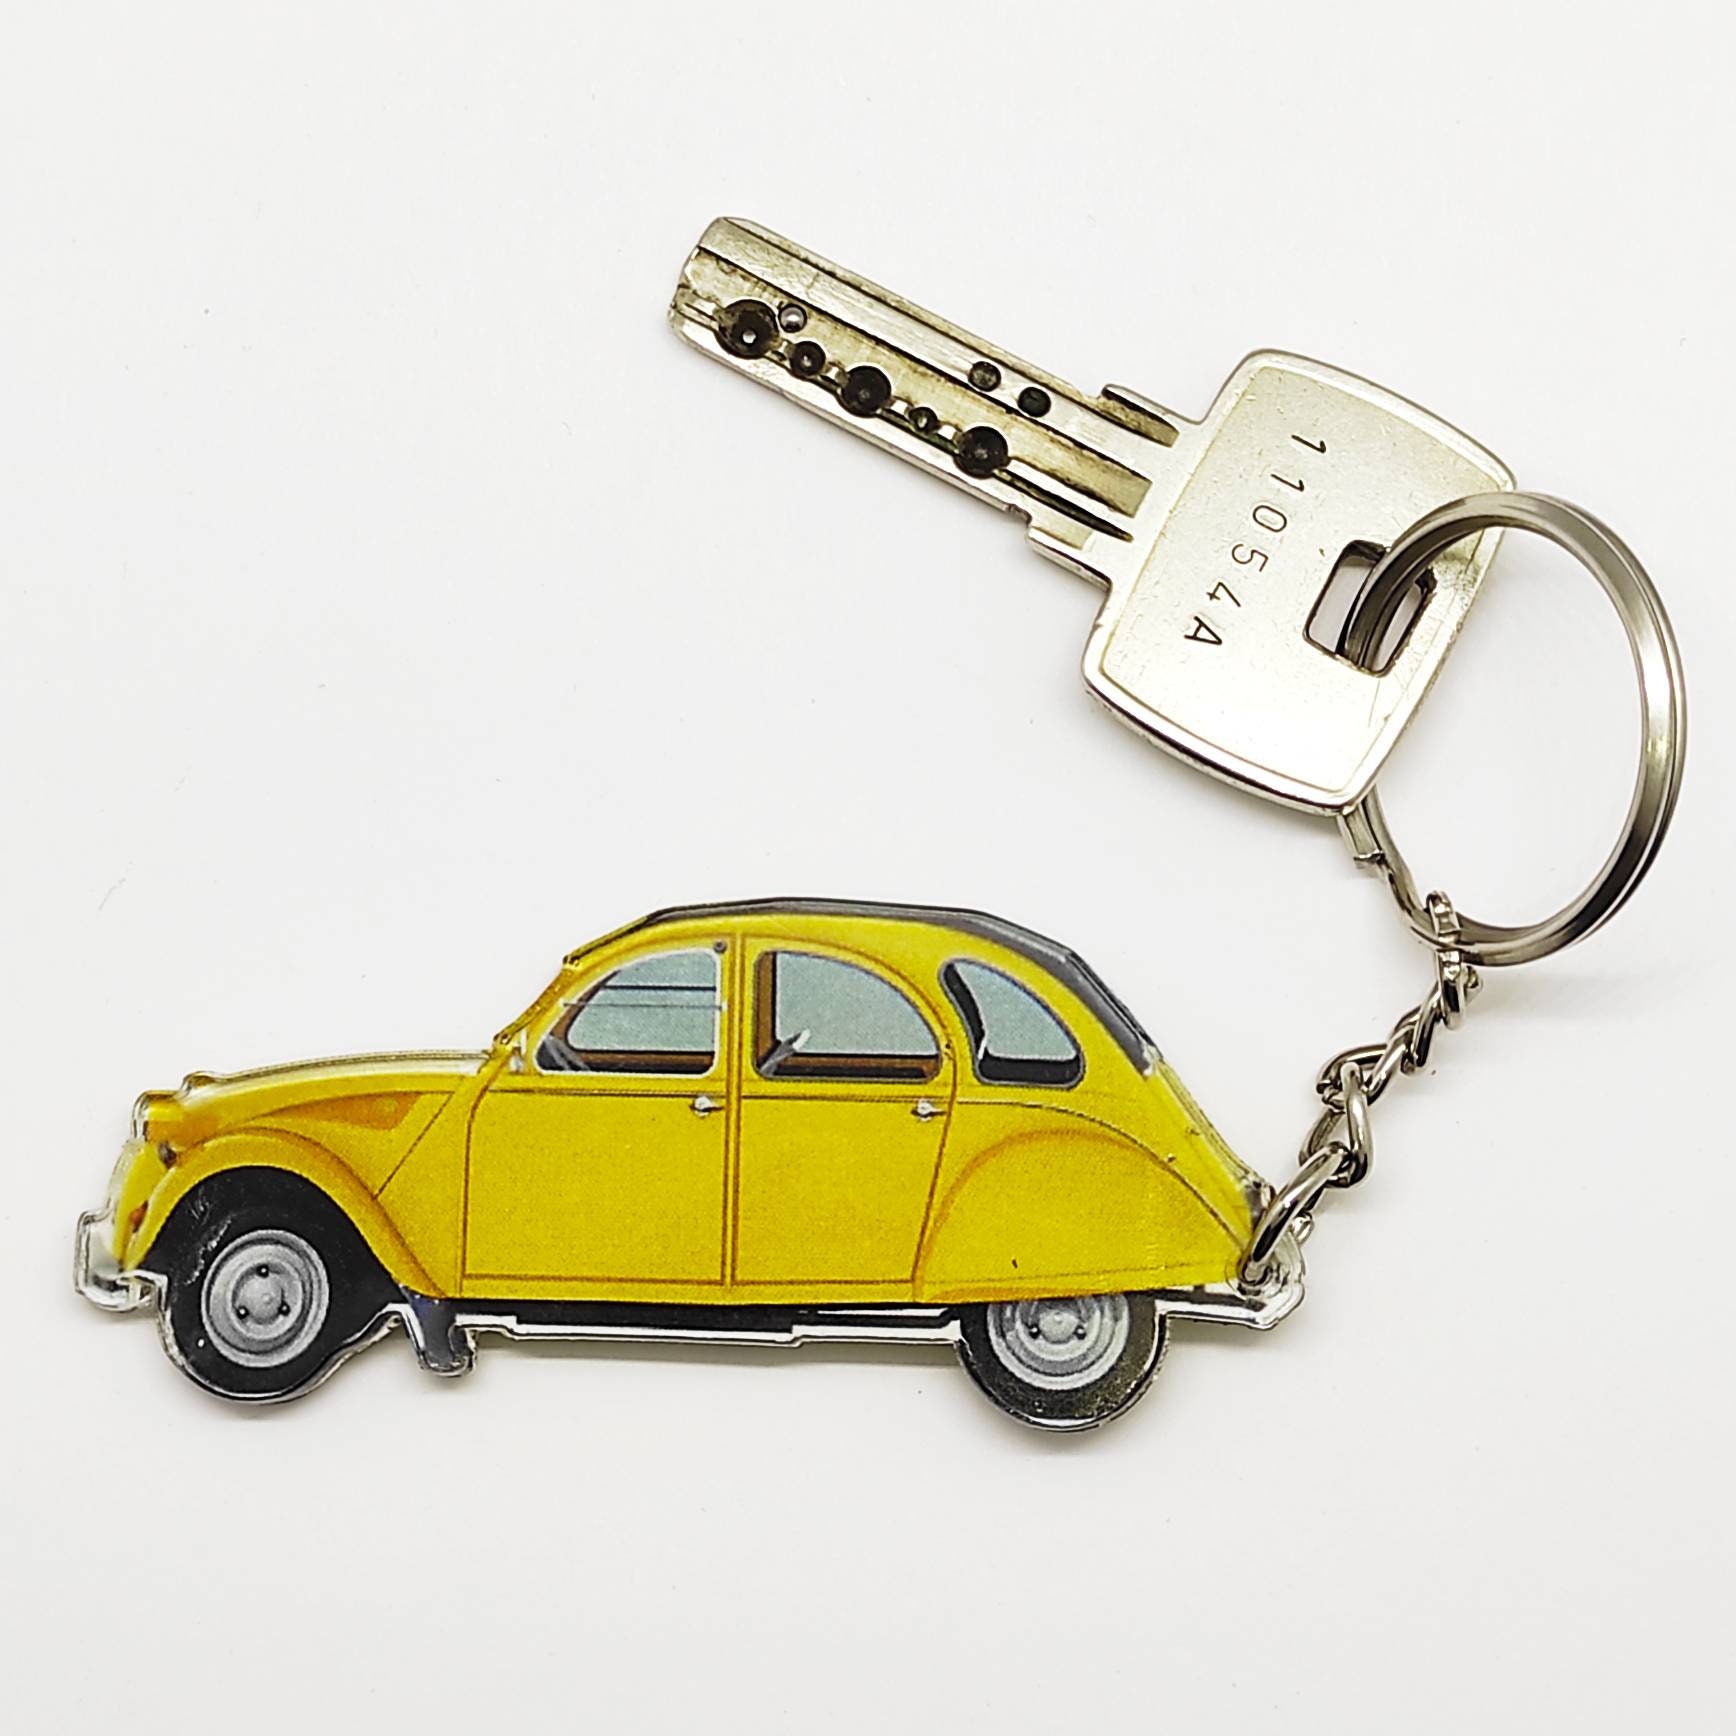 2/3/4 Btn Remote Auto Schlüssel Shell Case für Citroen Coupe Vtr C2 C3 C4  C5 C6 C8 Berlingo Picasso Xsara für Peugeot